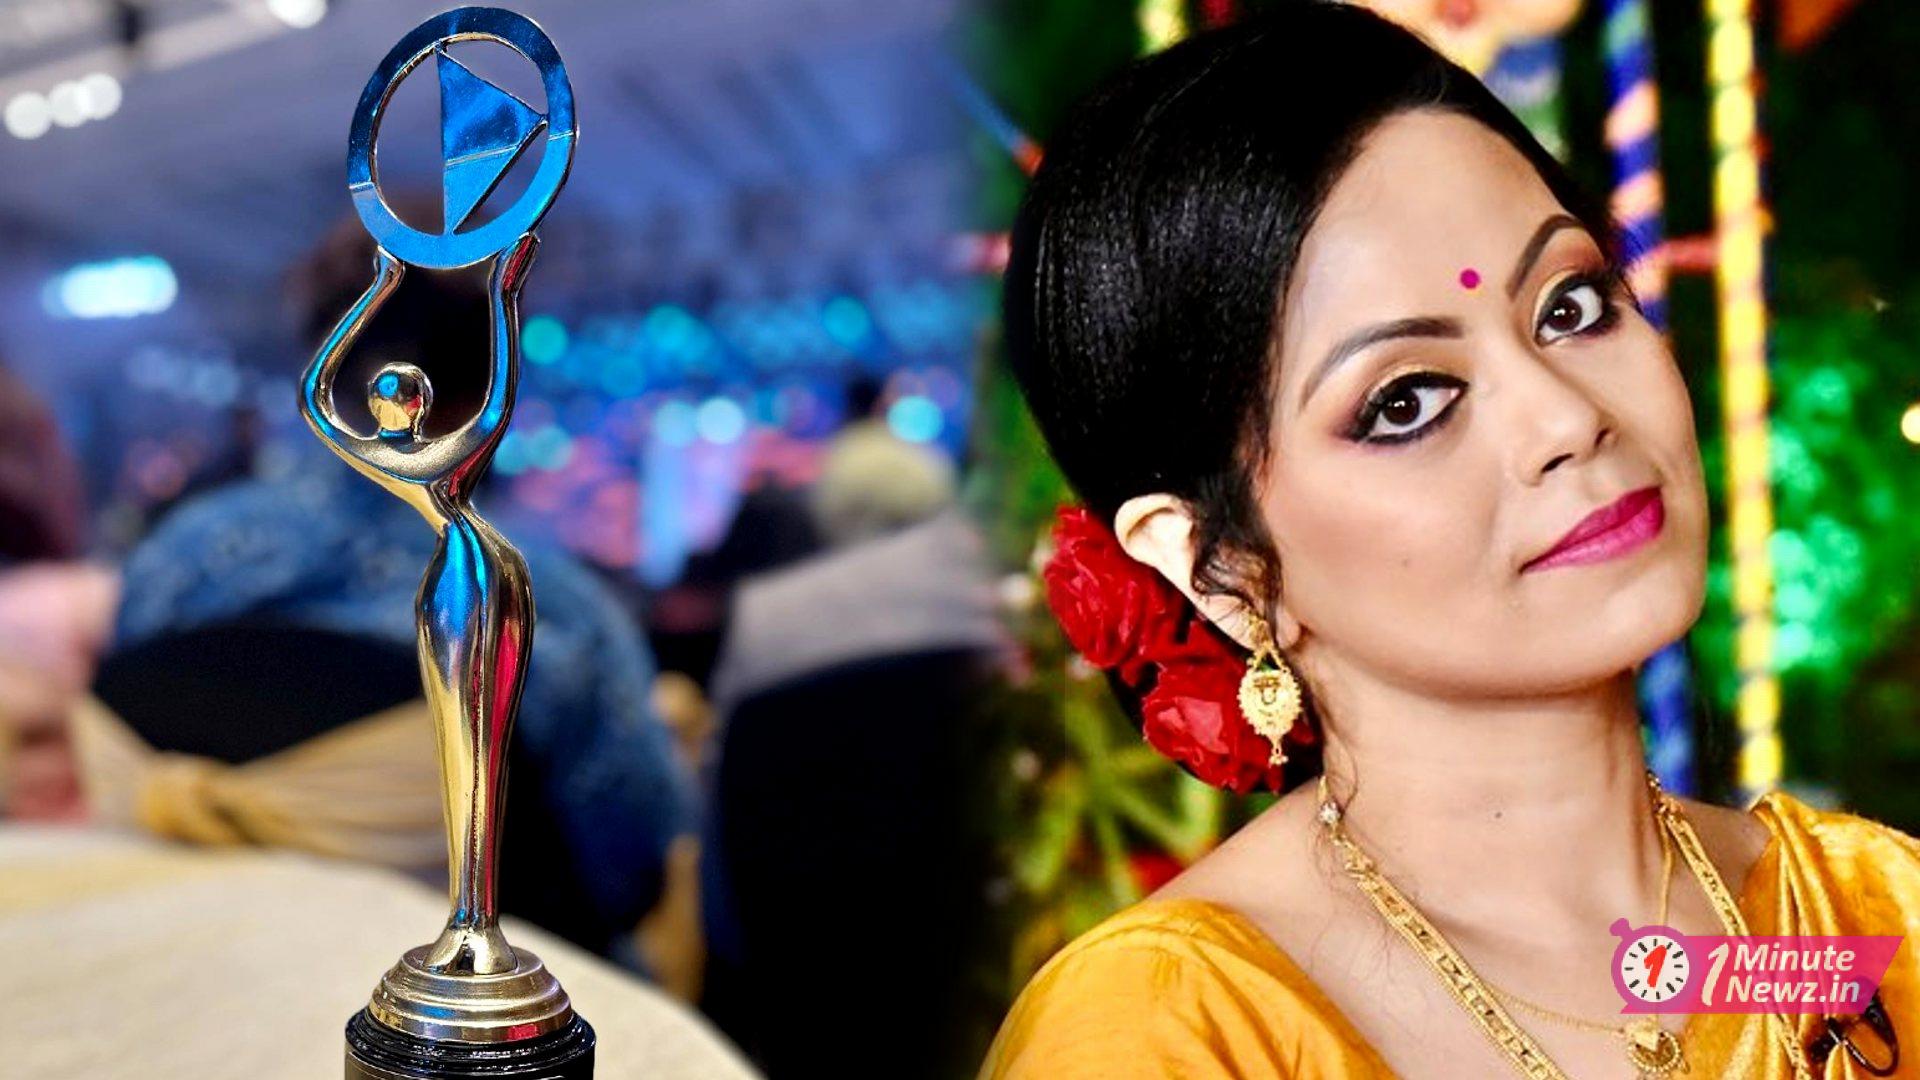 ahana dutta receive best villain character award for anurager chowa serial